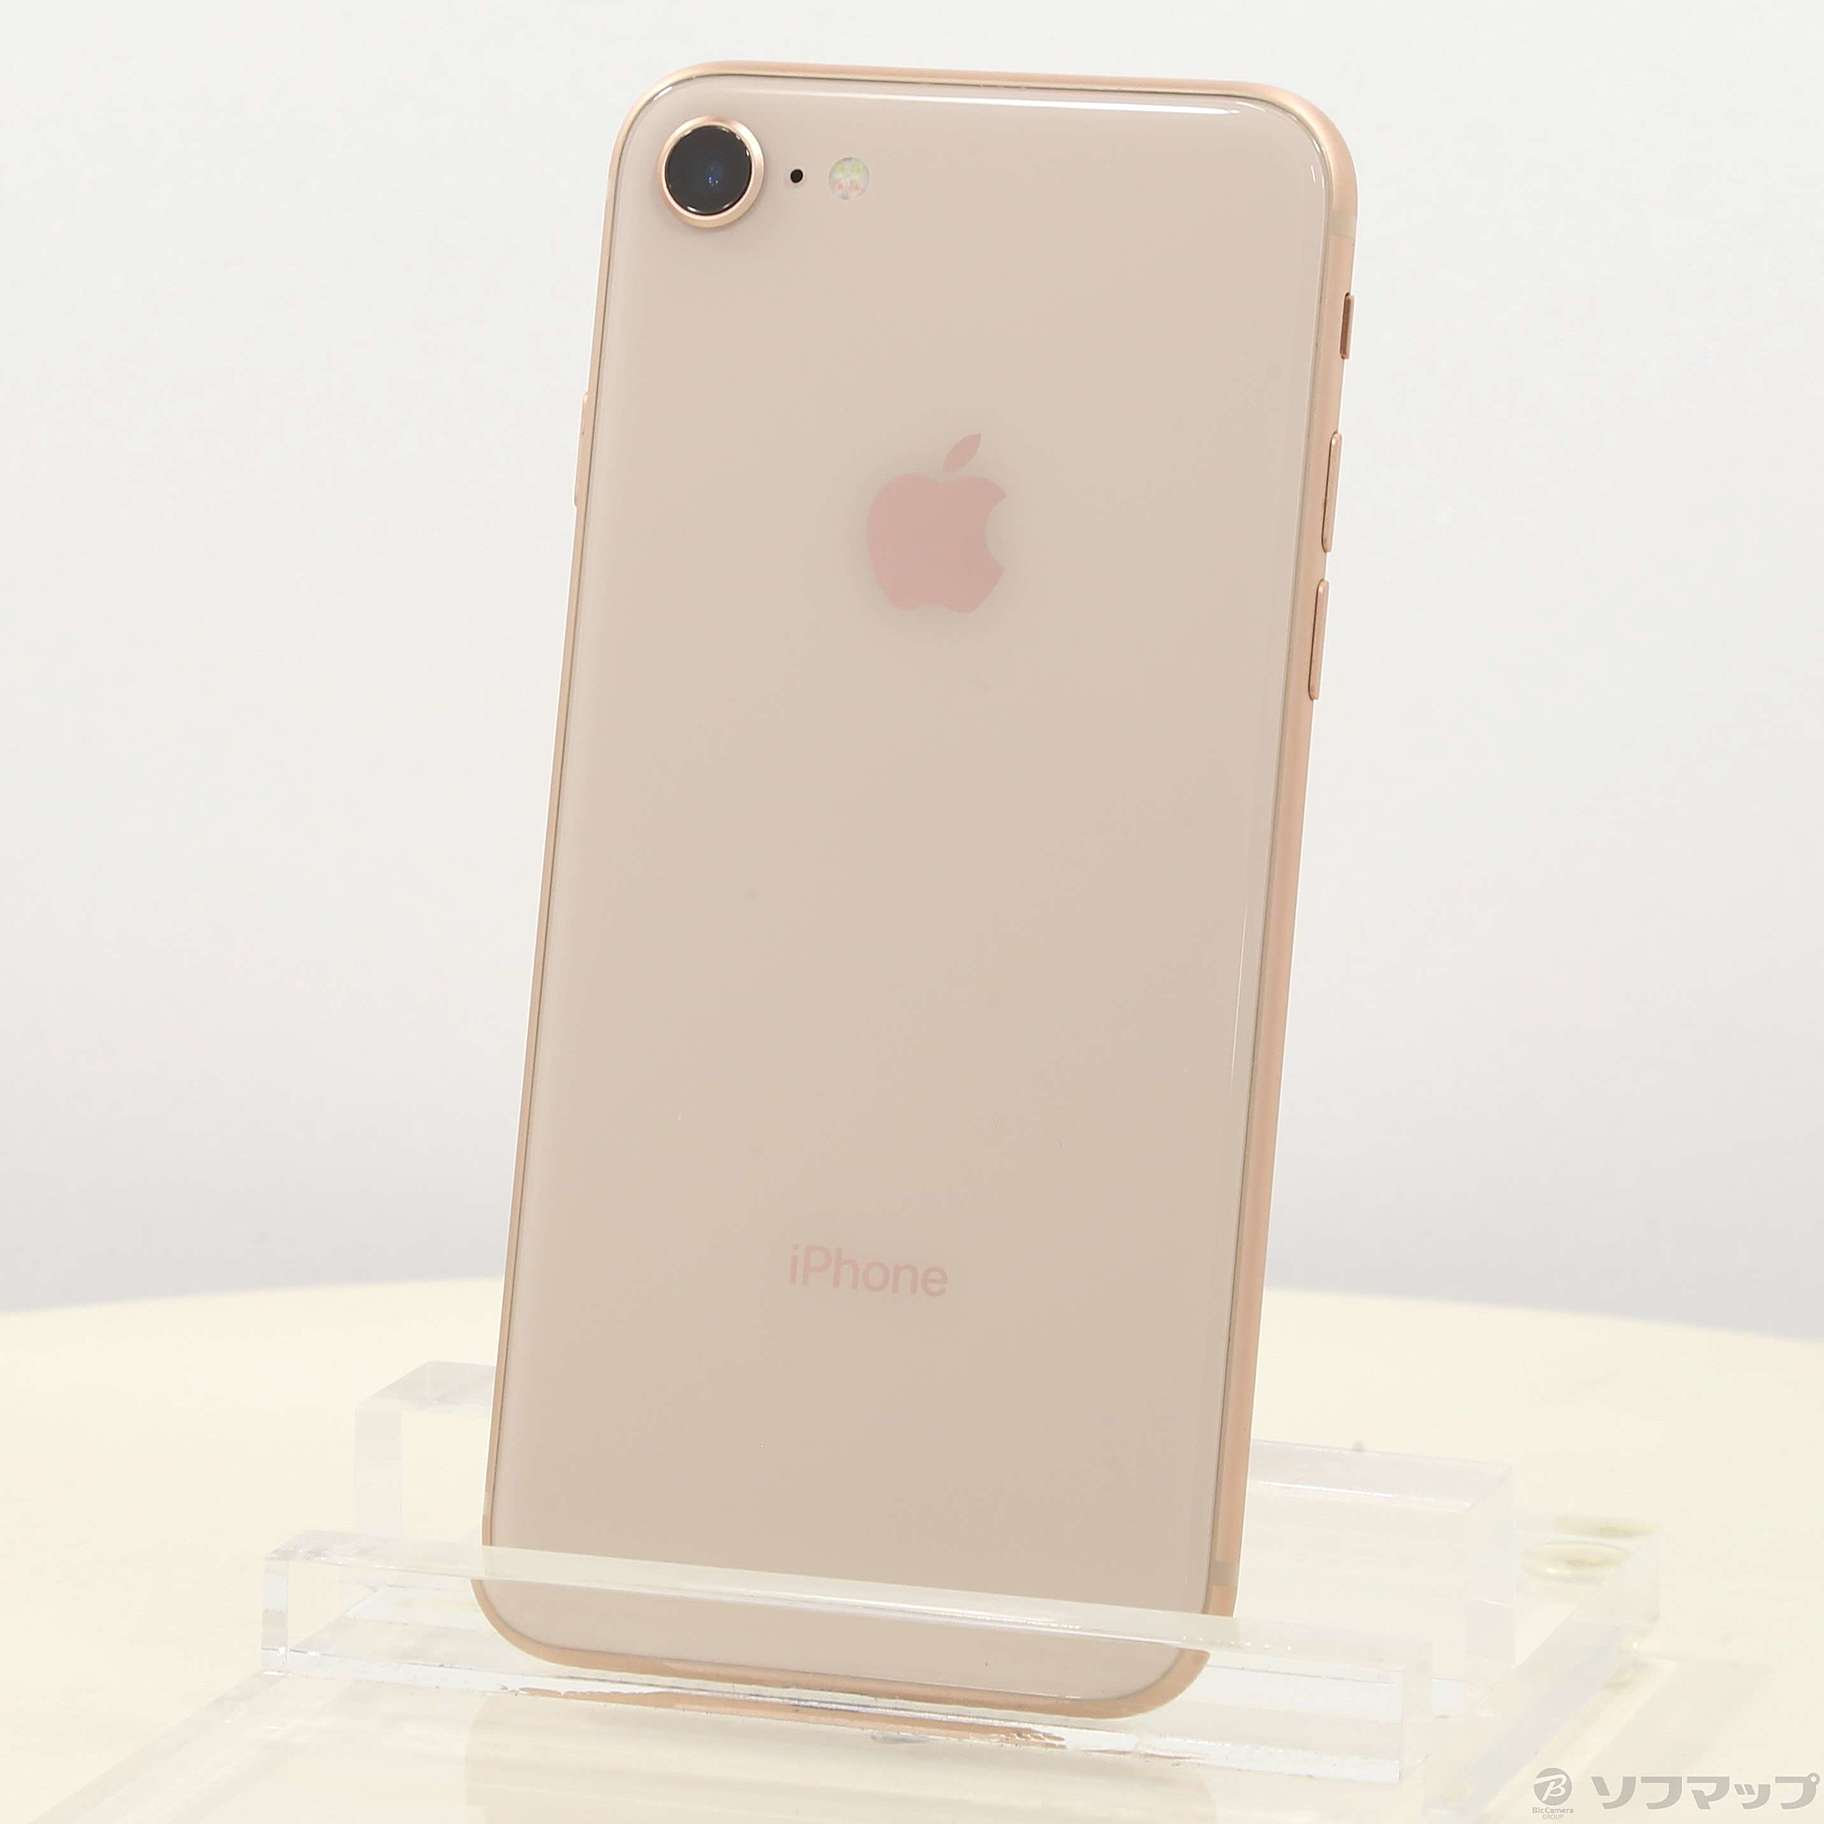 iPhone 8 Gold 256 GB MQ862J/A SIMフリー-